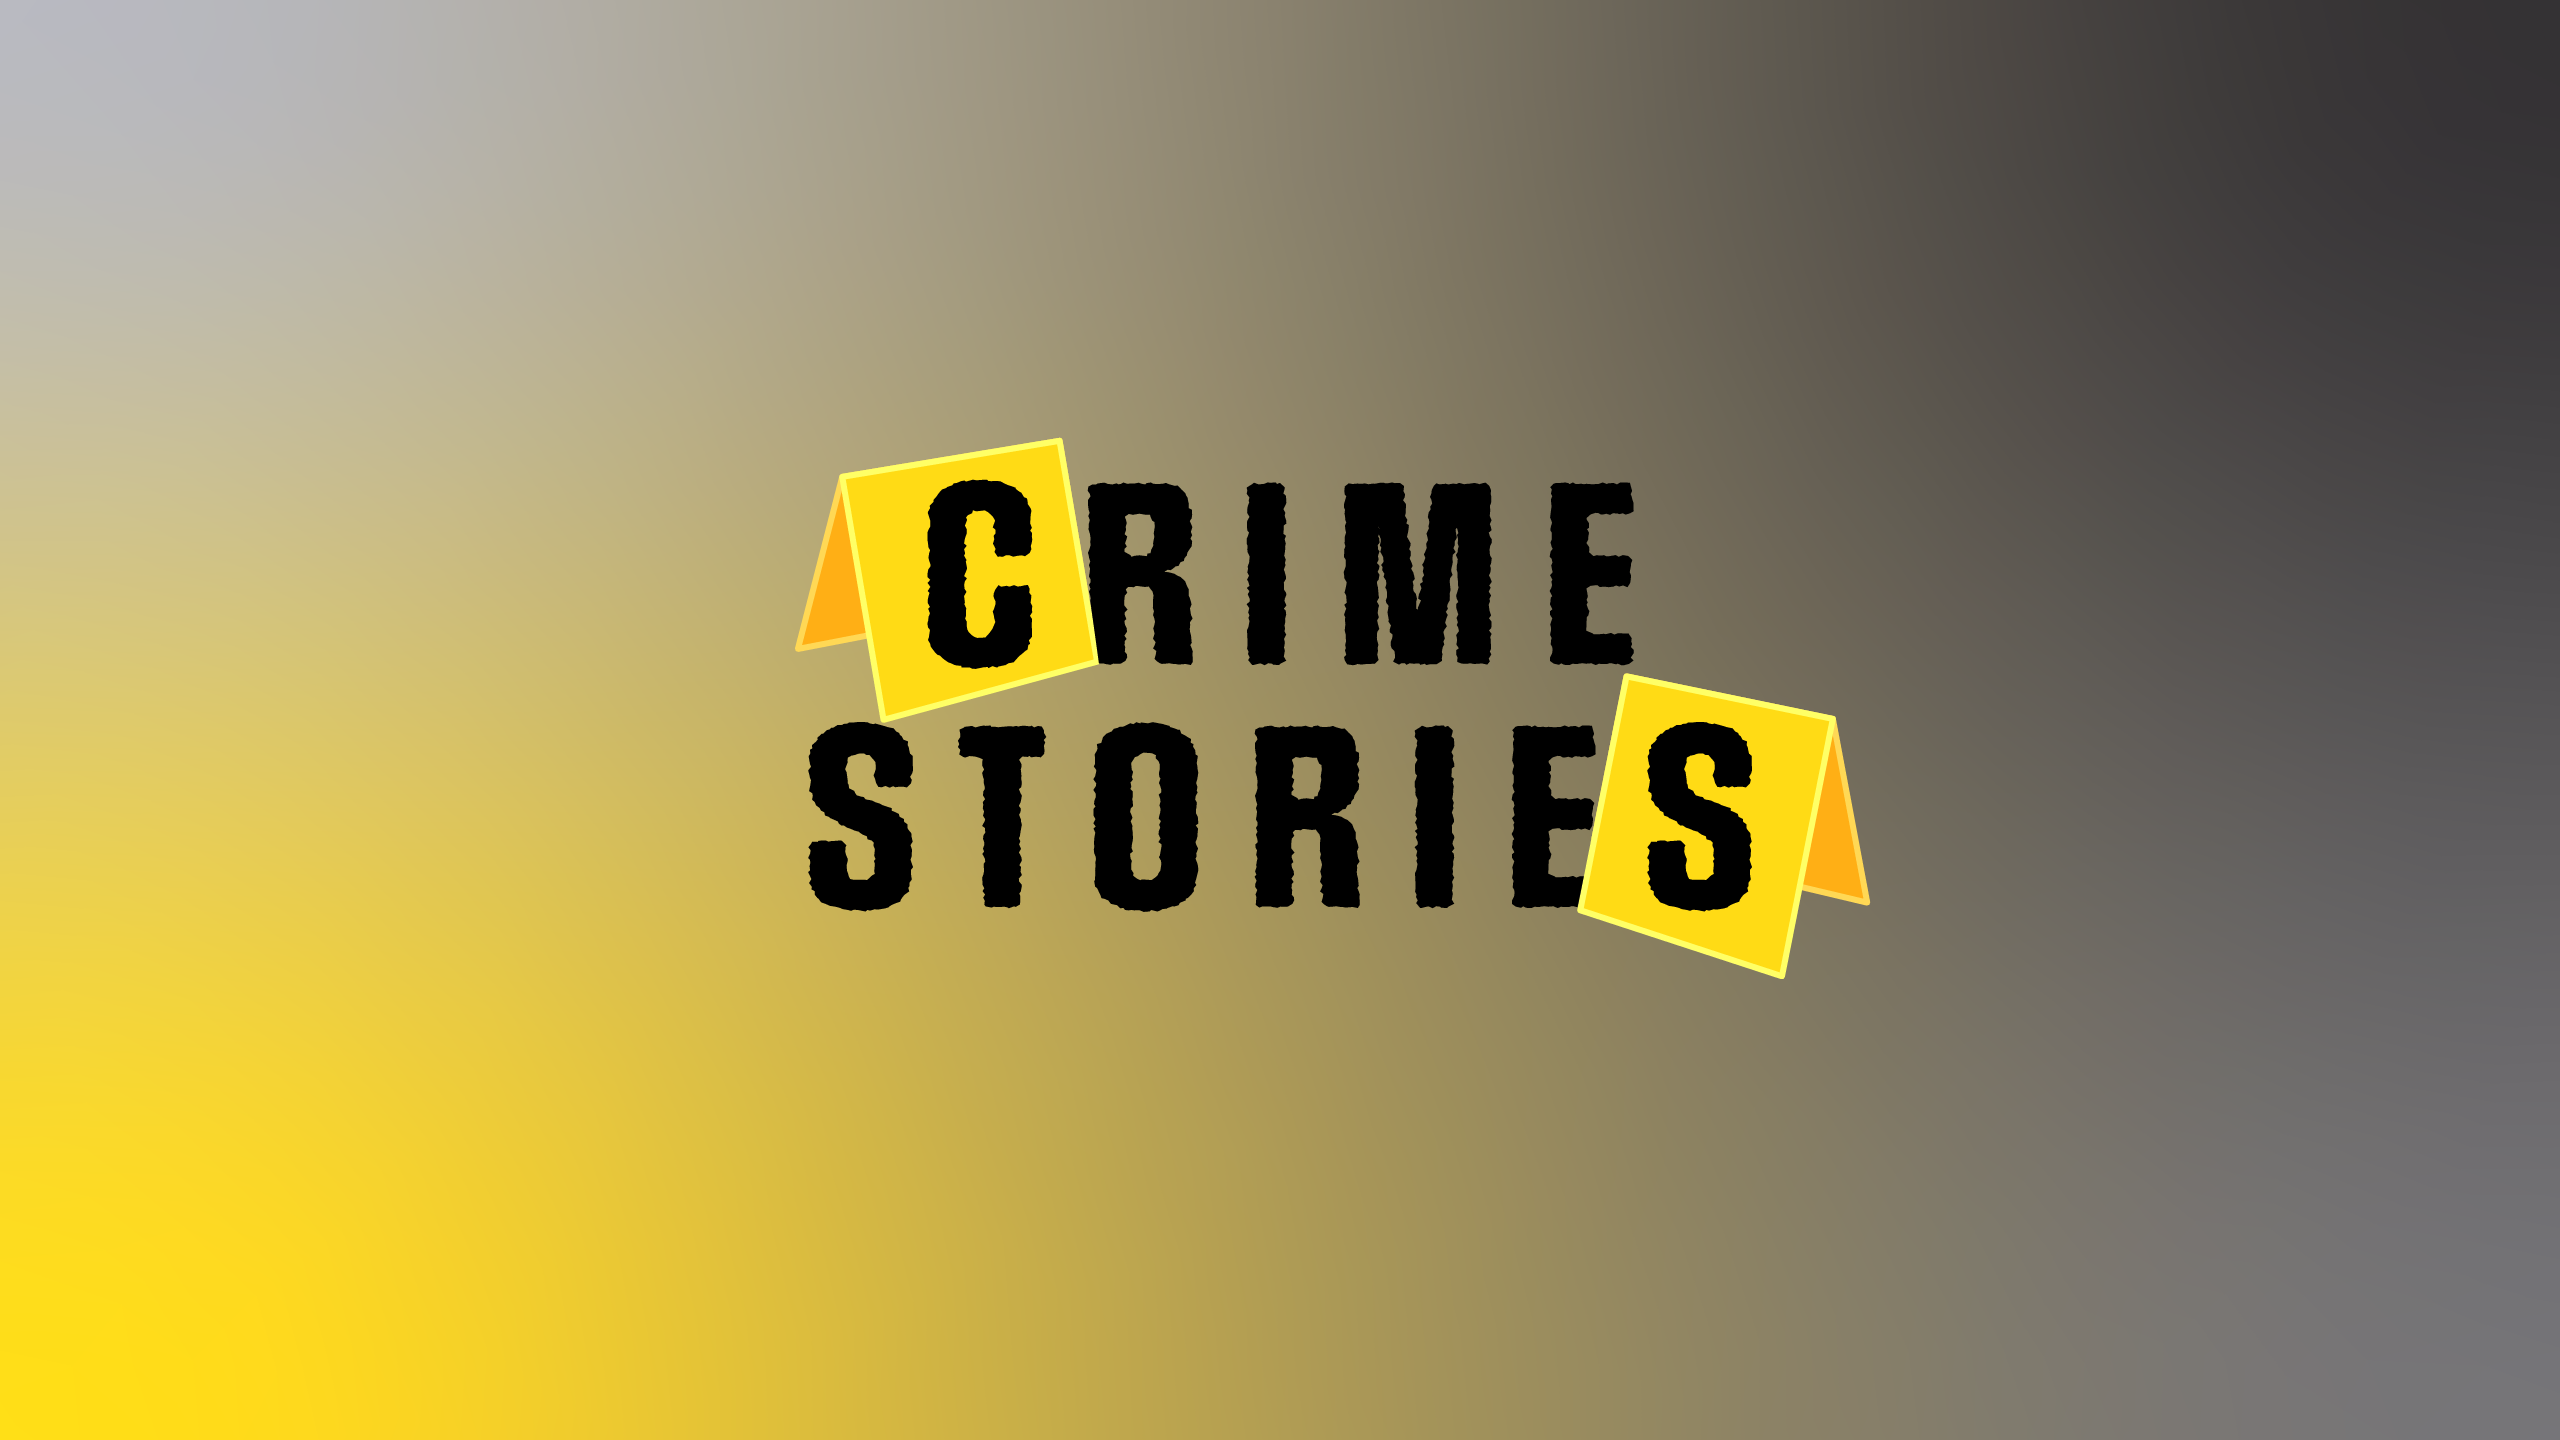 CRIME STORIES ARTWORK